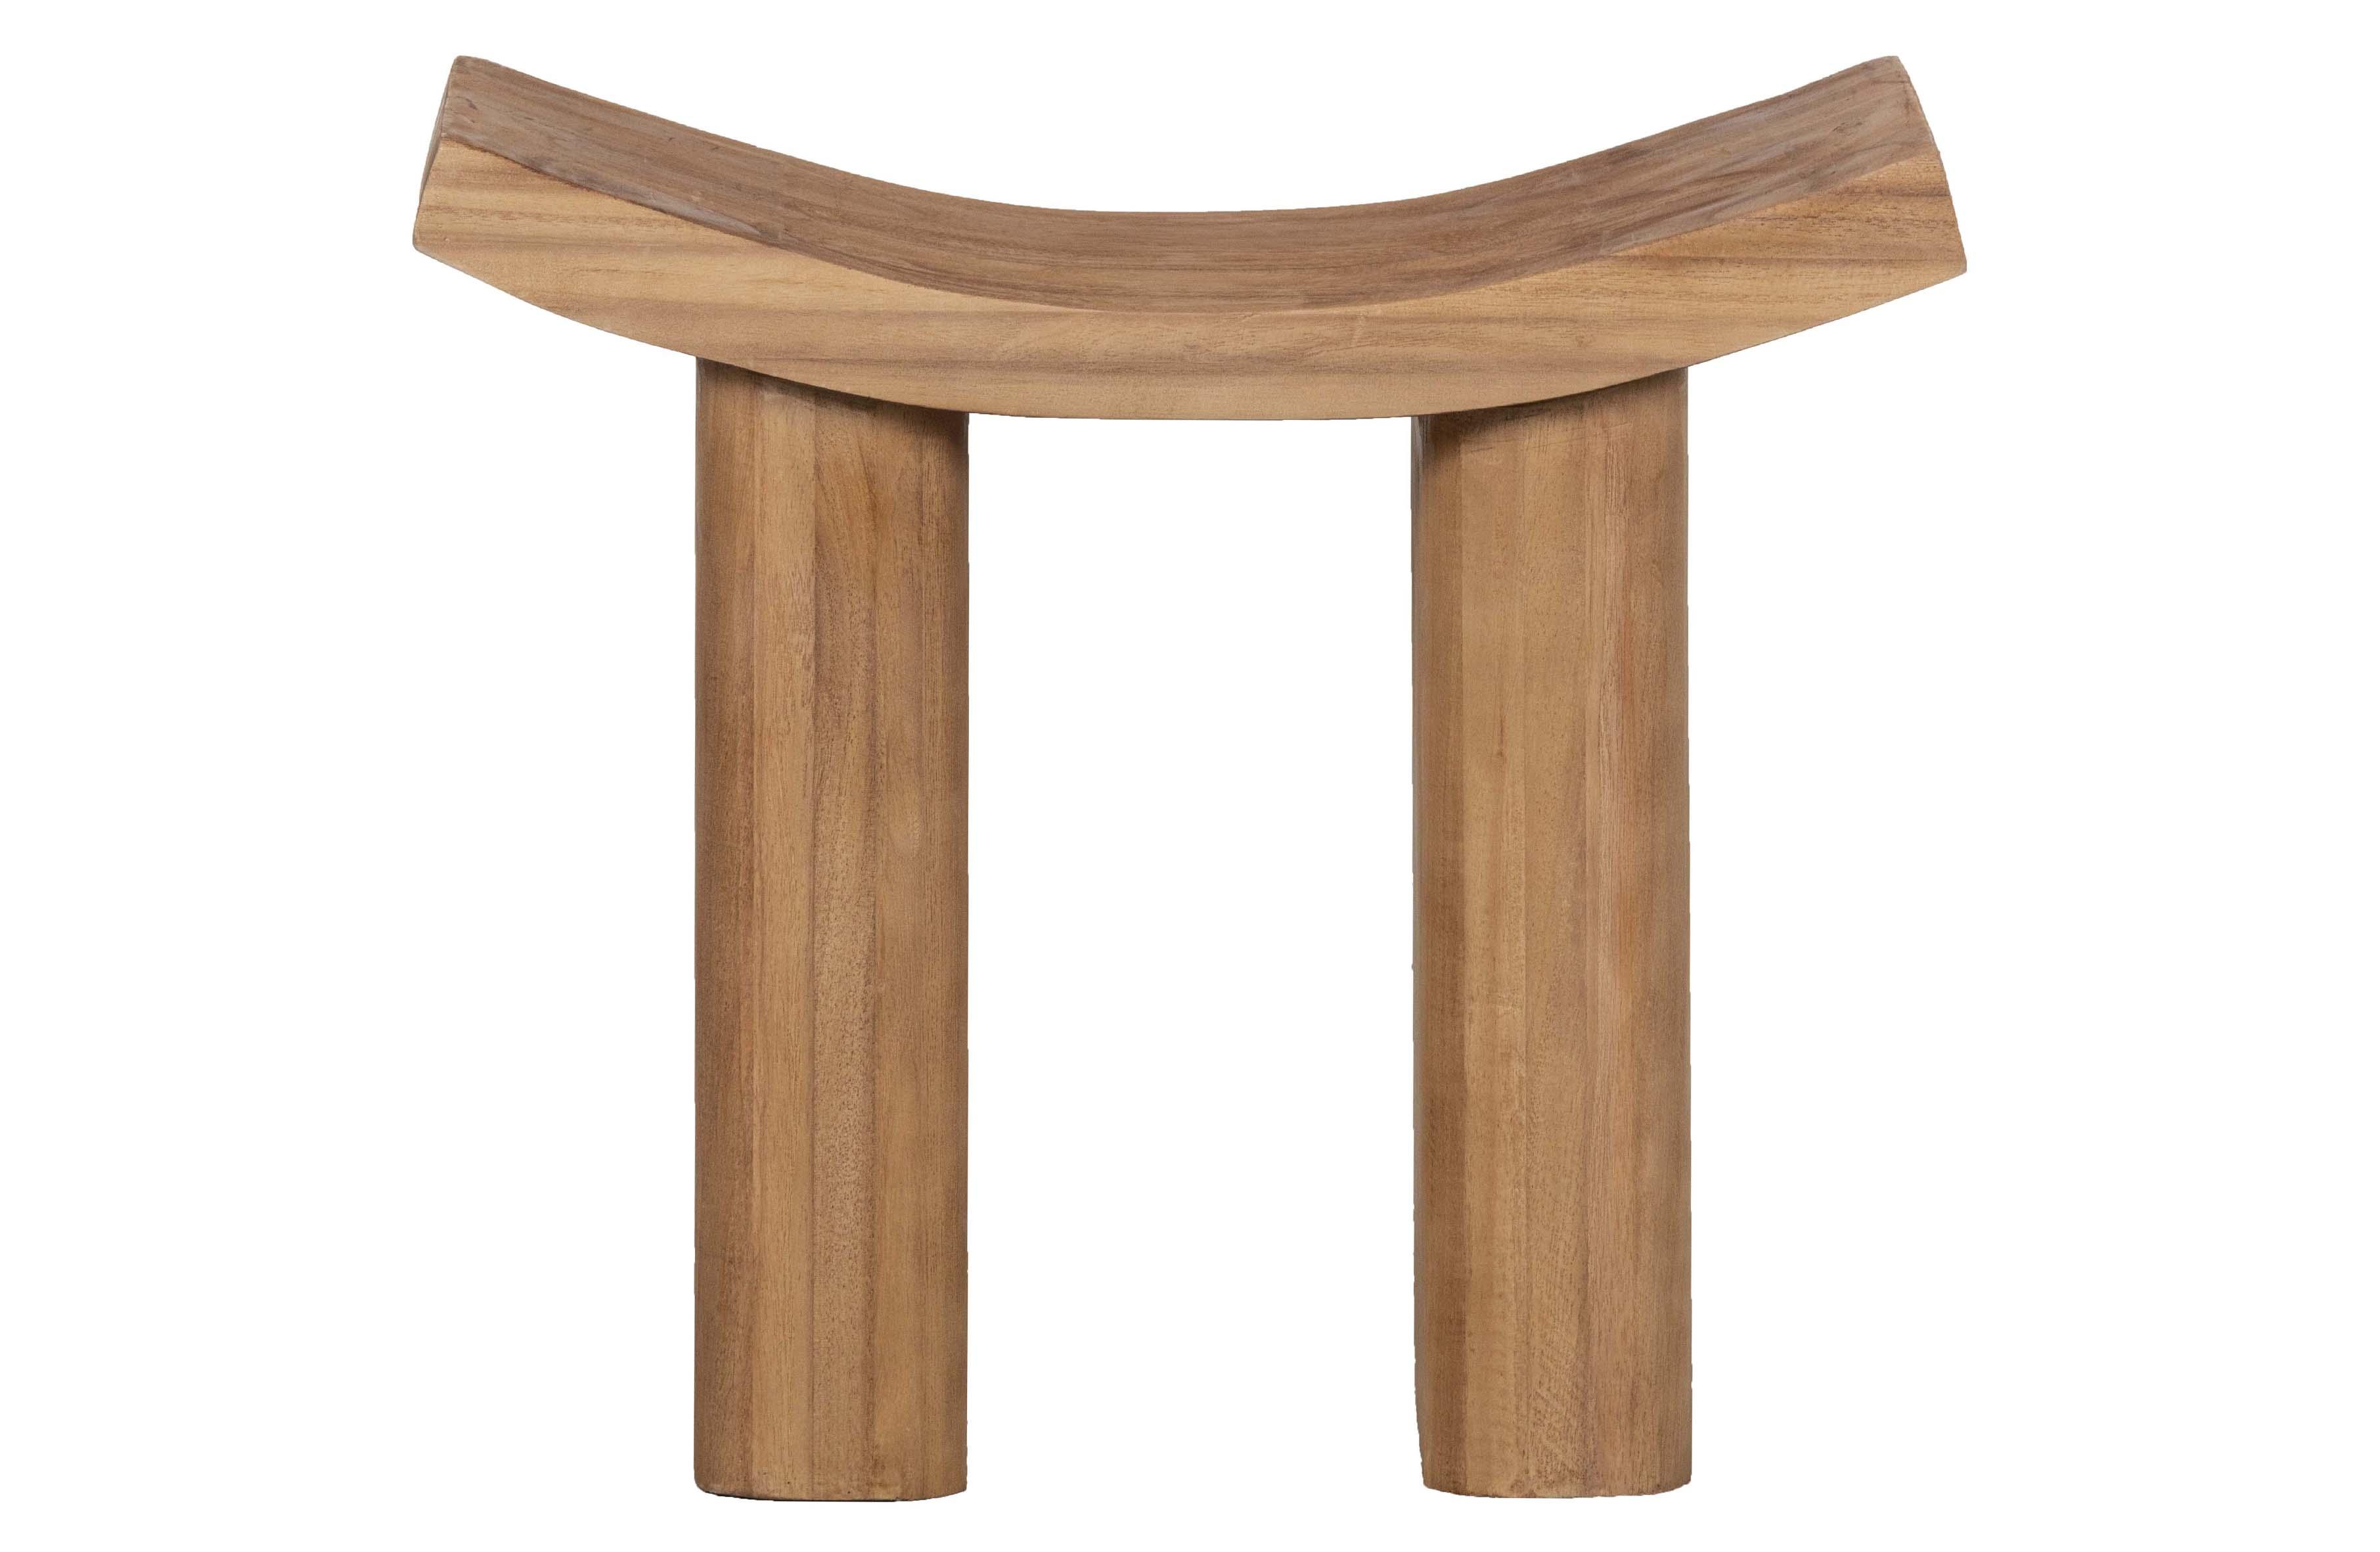 Japan scaun din lemn natural - PARIS14A.RO